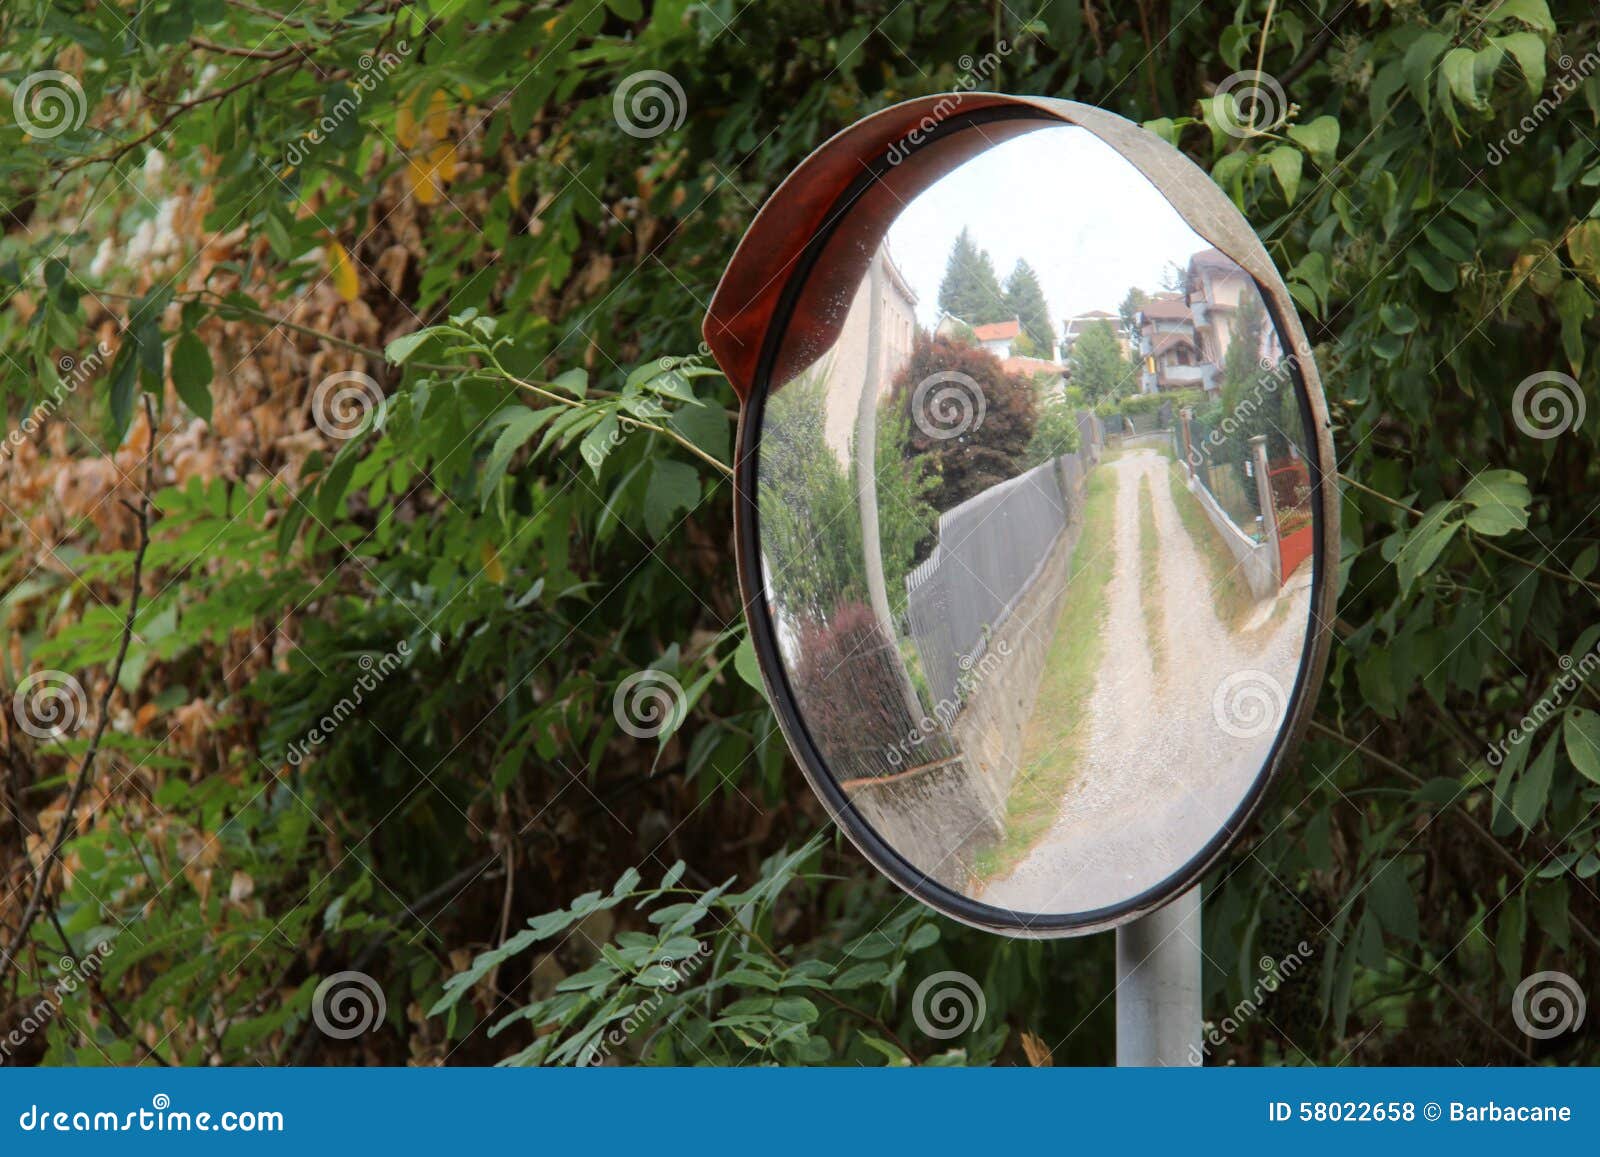 traffic mirror